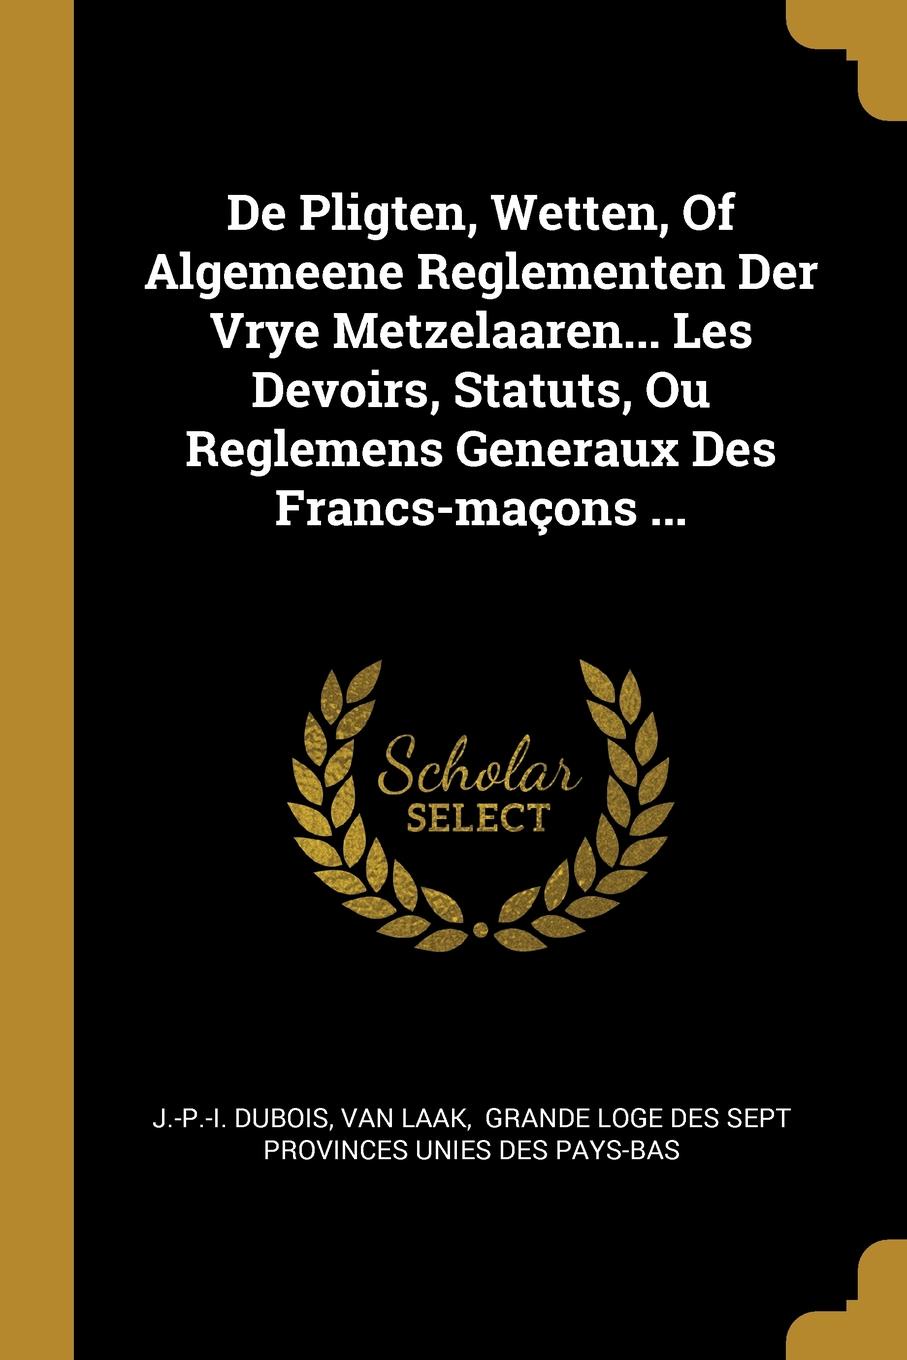 De Pligten, Wetten, Of Algemeene Reglementen Der Vrye Metzelaaren... Les Devoirs, Statuts, Ou Reglemens Generaux Des Francs-macons ...